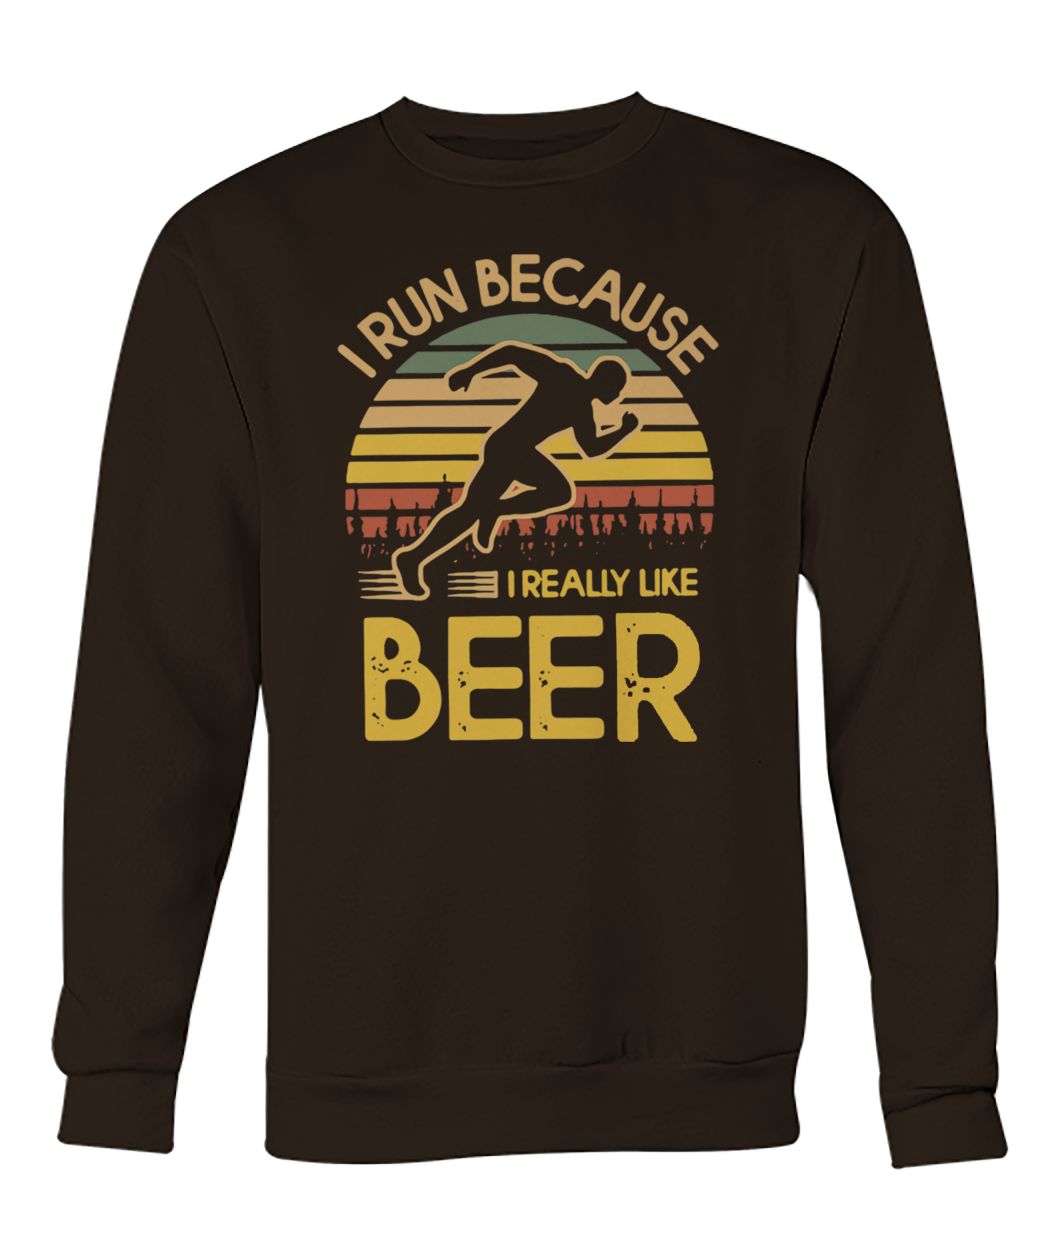 Vintage I run because I really like beer crew neck sweatshirt